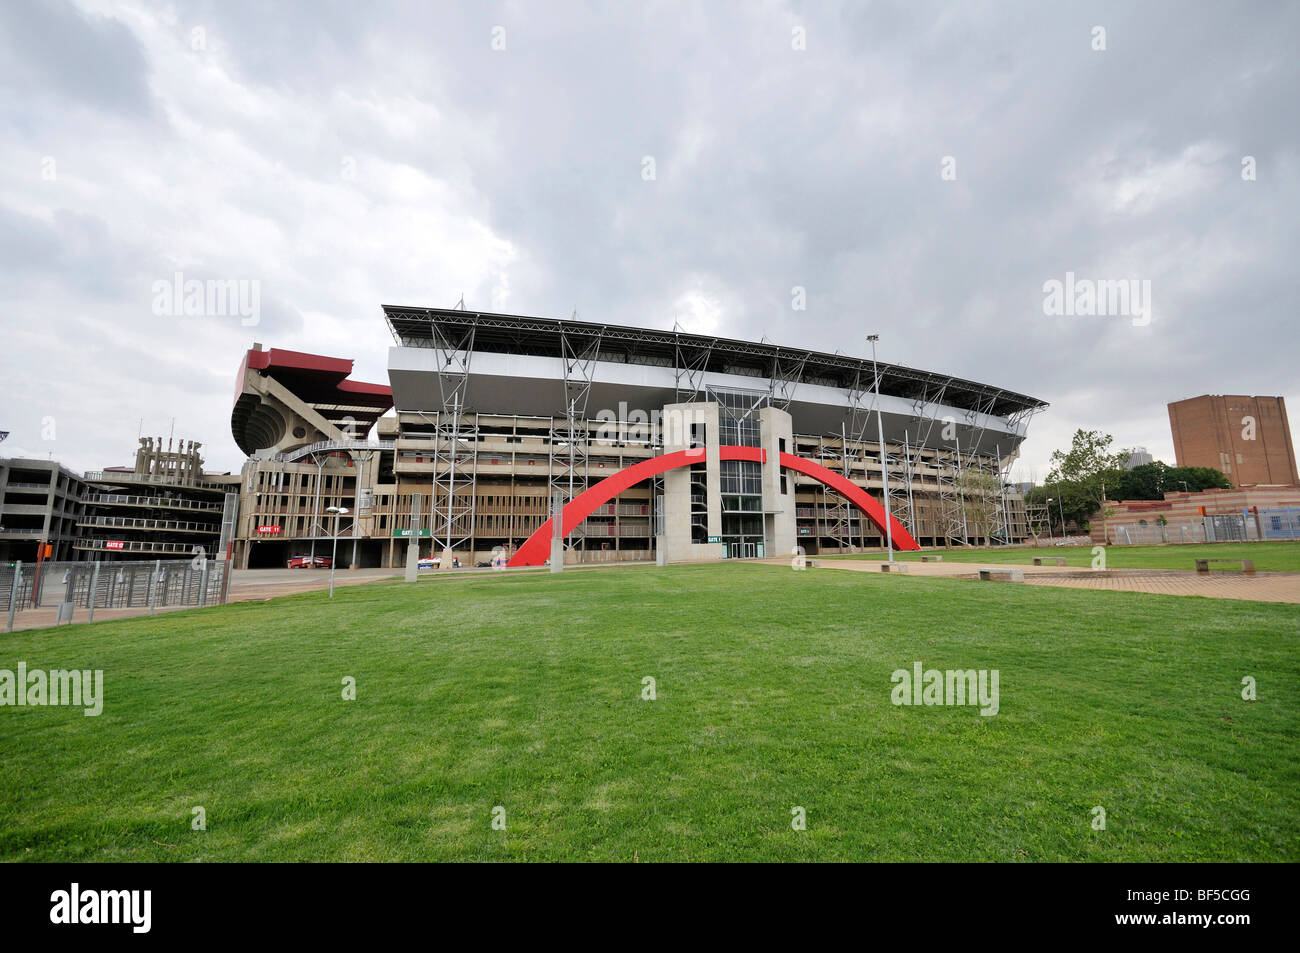 2010 FIFA World Cup, Ellis Park oder Coca-Cola Park Stadion in Johannesburg, Südafrika, Afrika Stockfoto